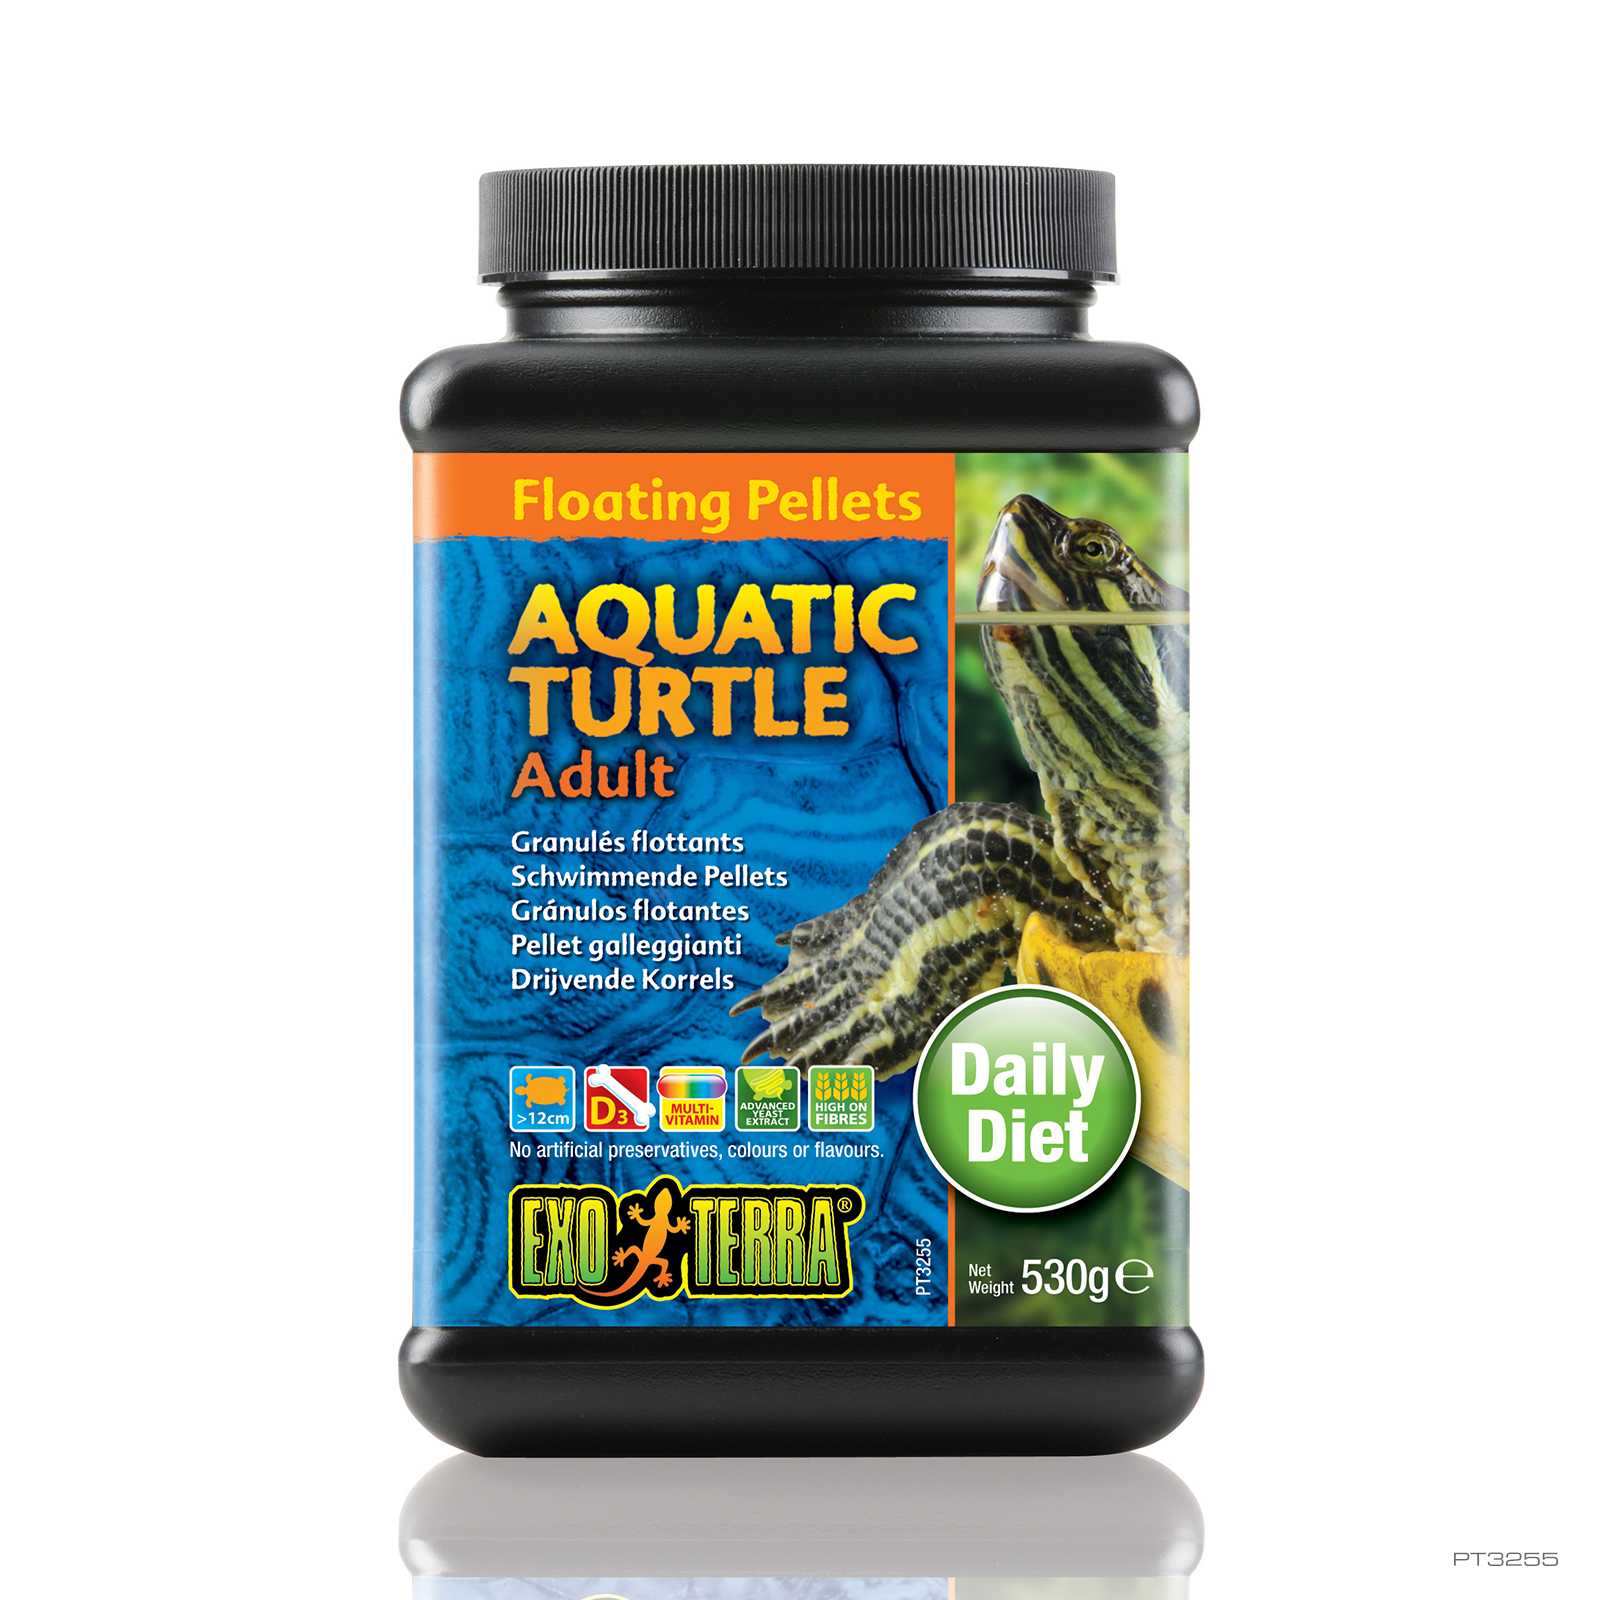 Floating Pellets Aquatic Turtle Adult 18.6 oz - 530 g